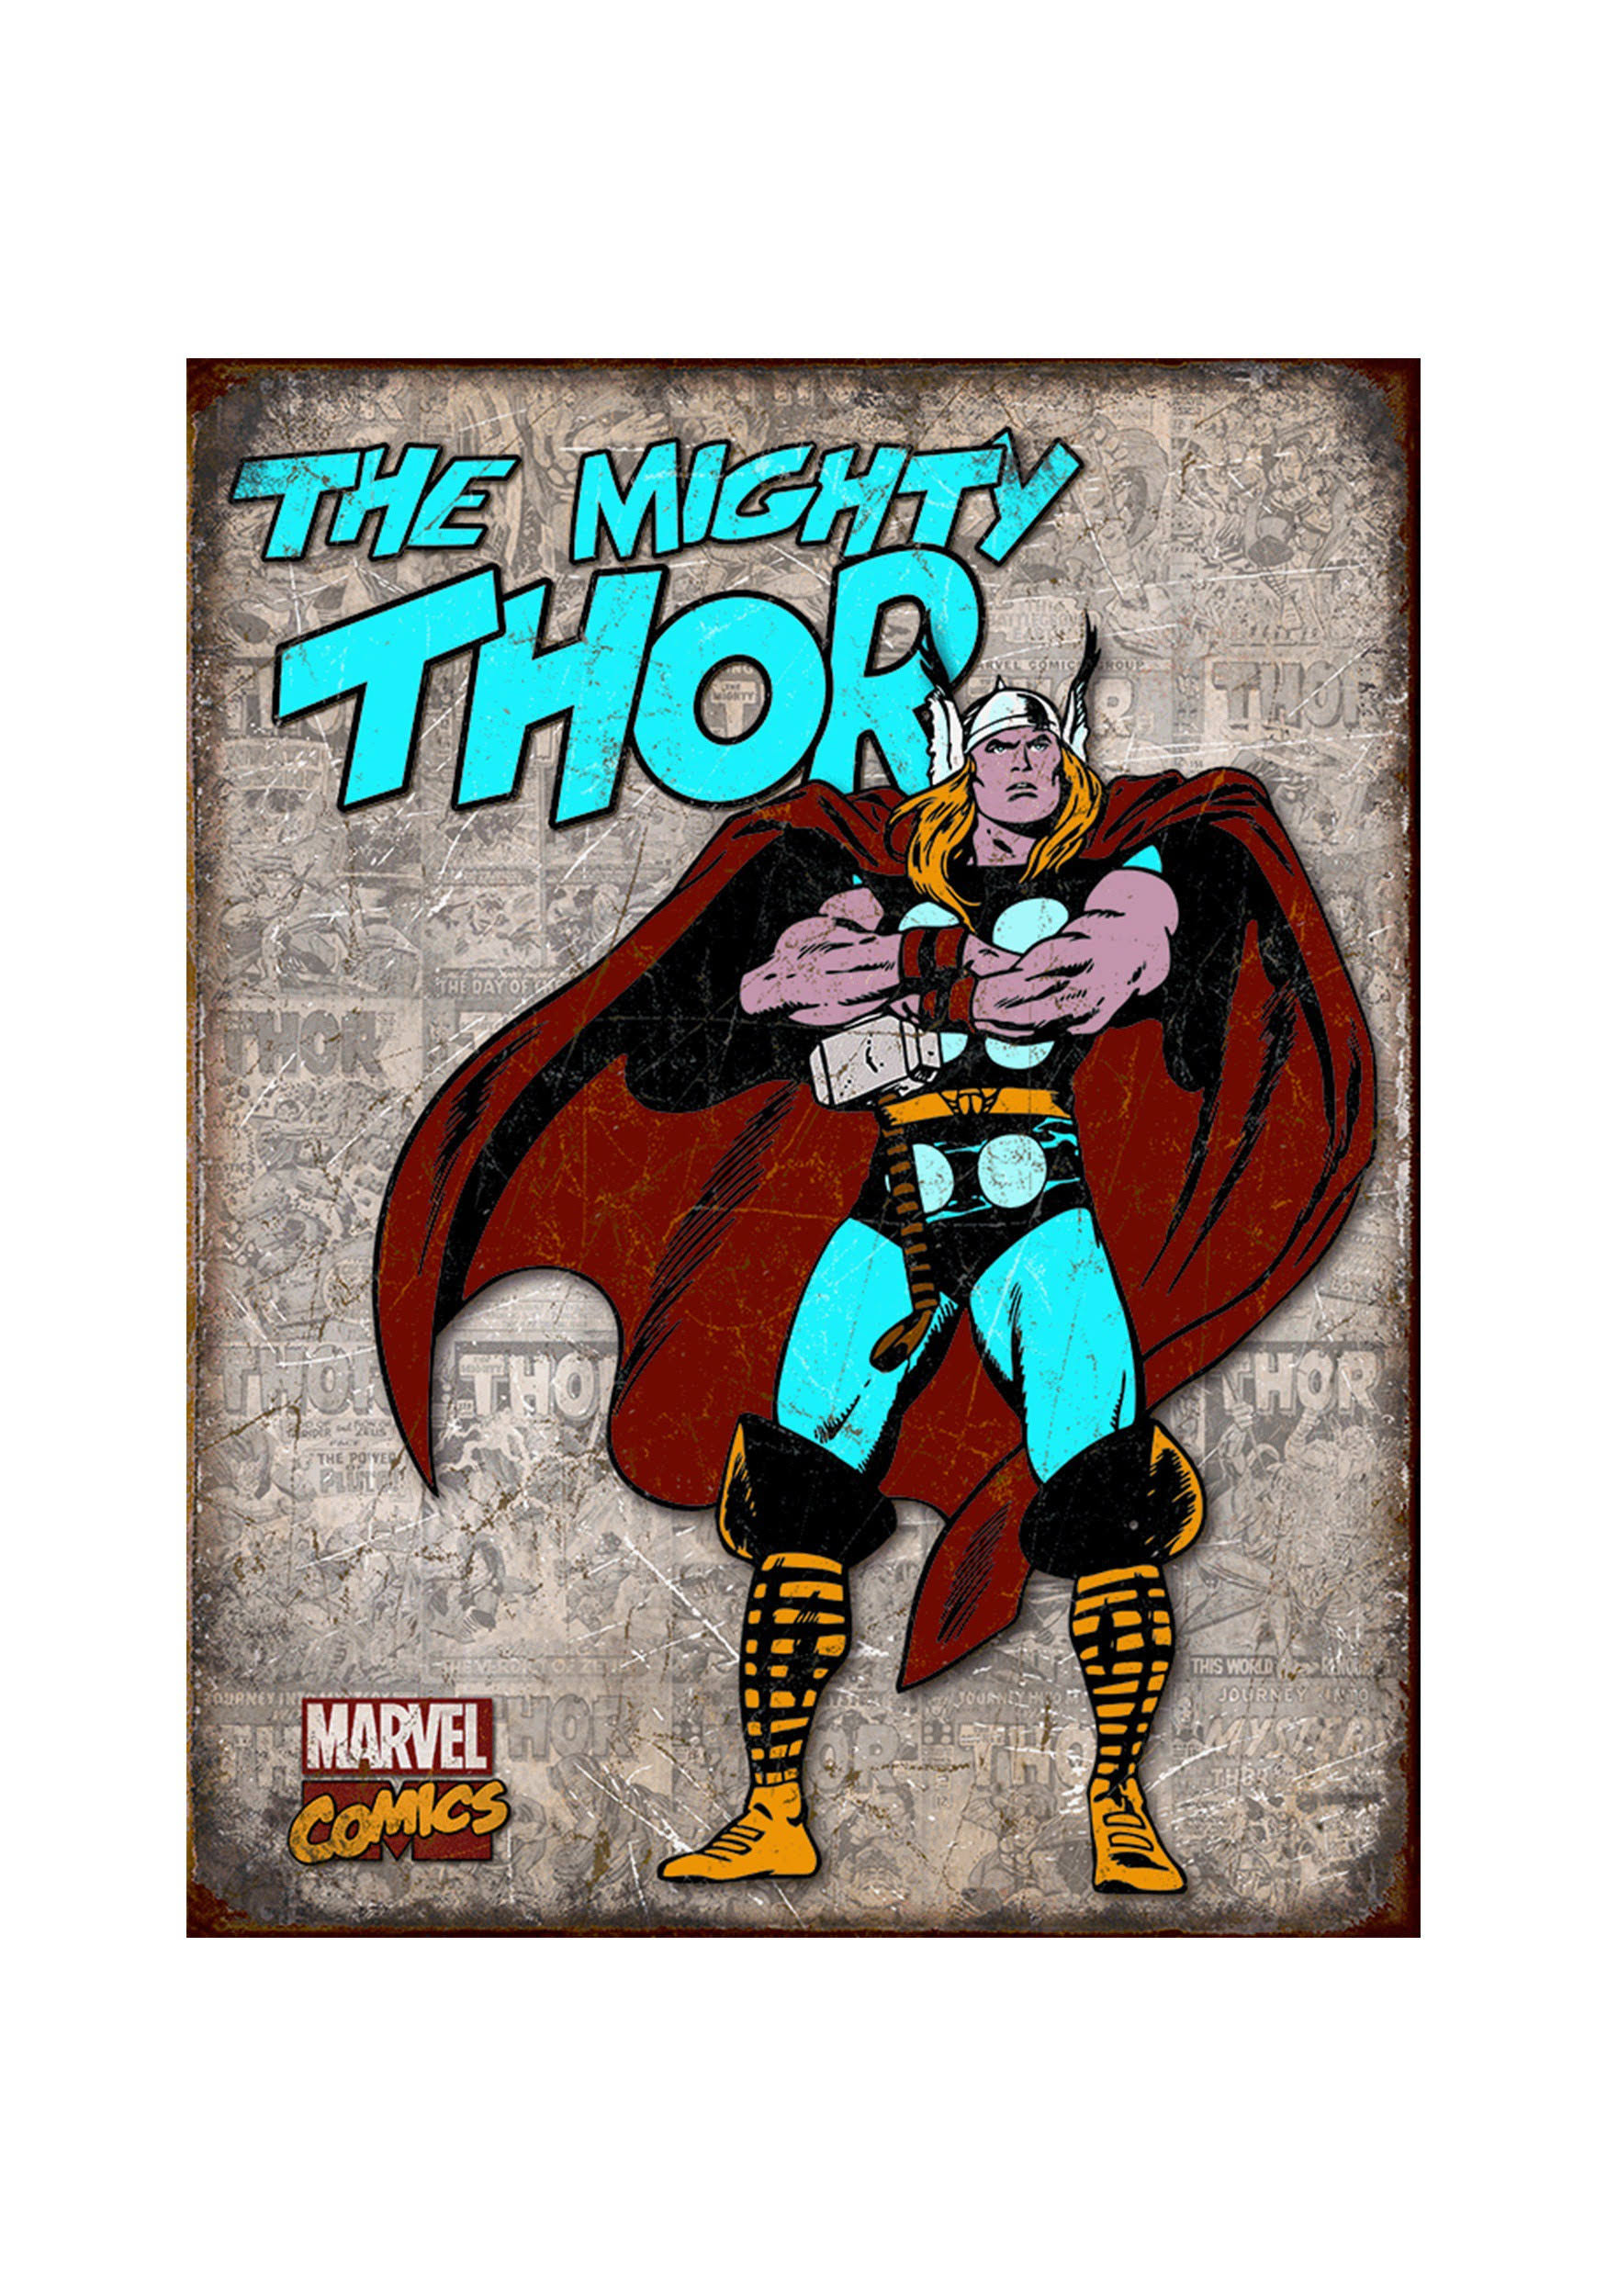 Desperate Enterprise The Mighty Thor Comic Book Cover Vintage Retro Metal Tin - Large